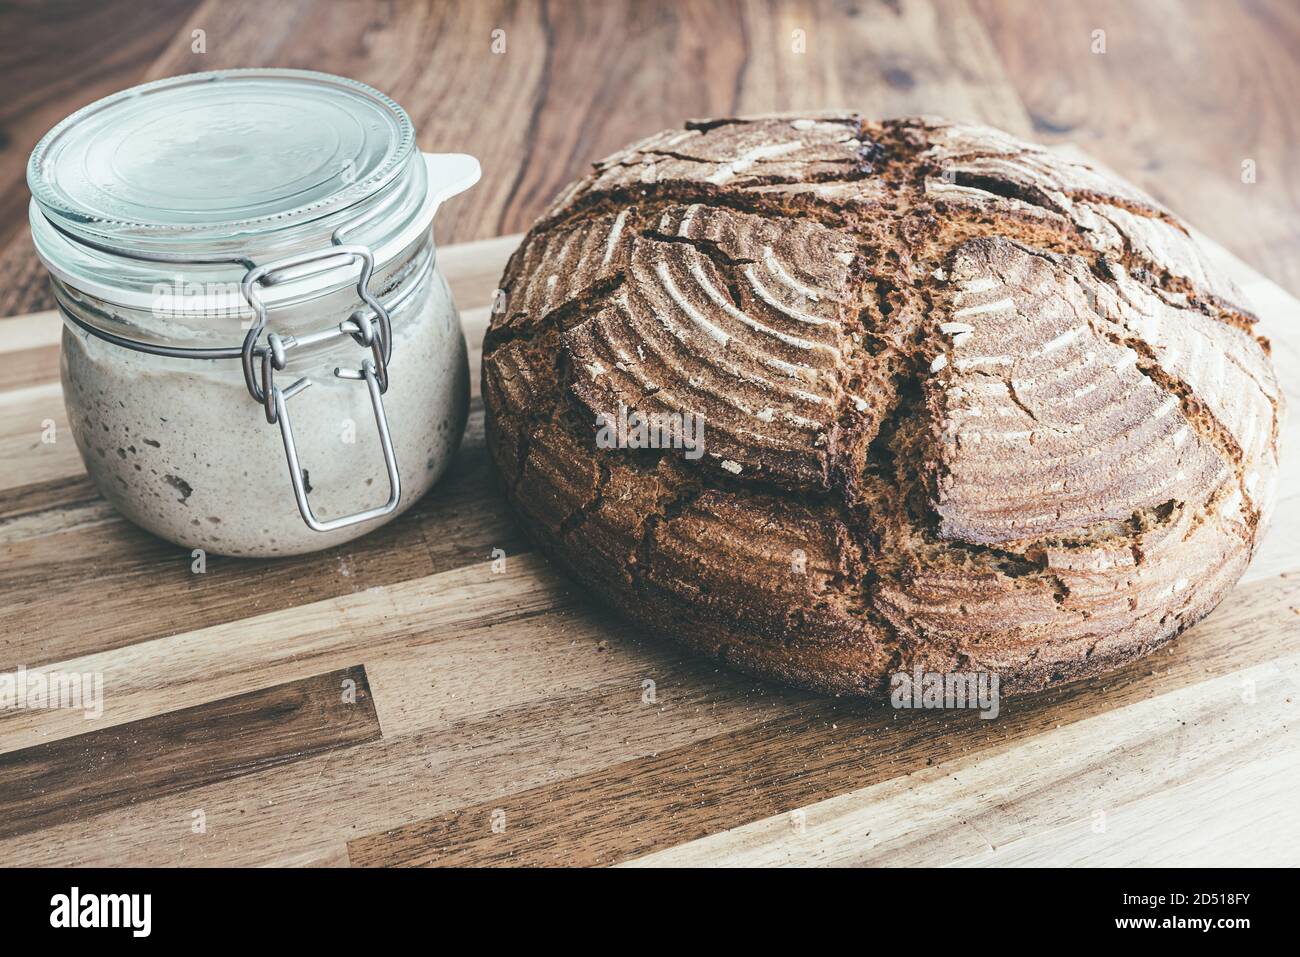 freshly baked homemade rye sourdough bread and sourdough starter in jar on wooden table Stock Photo